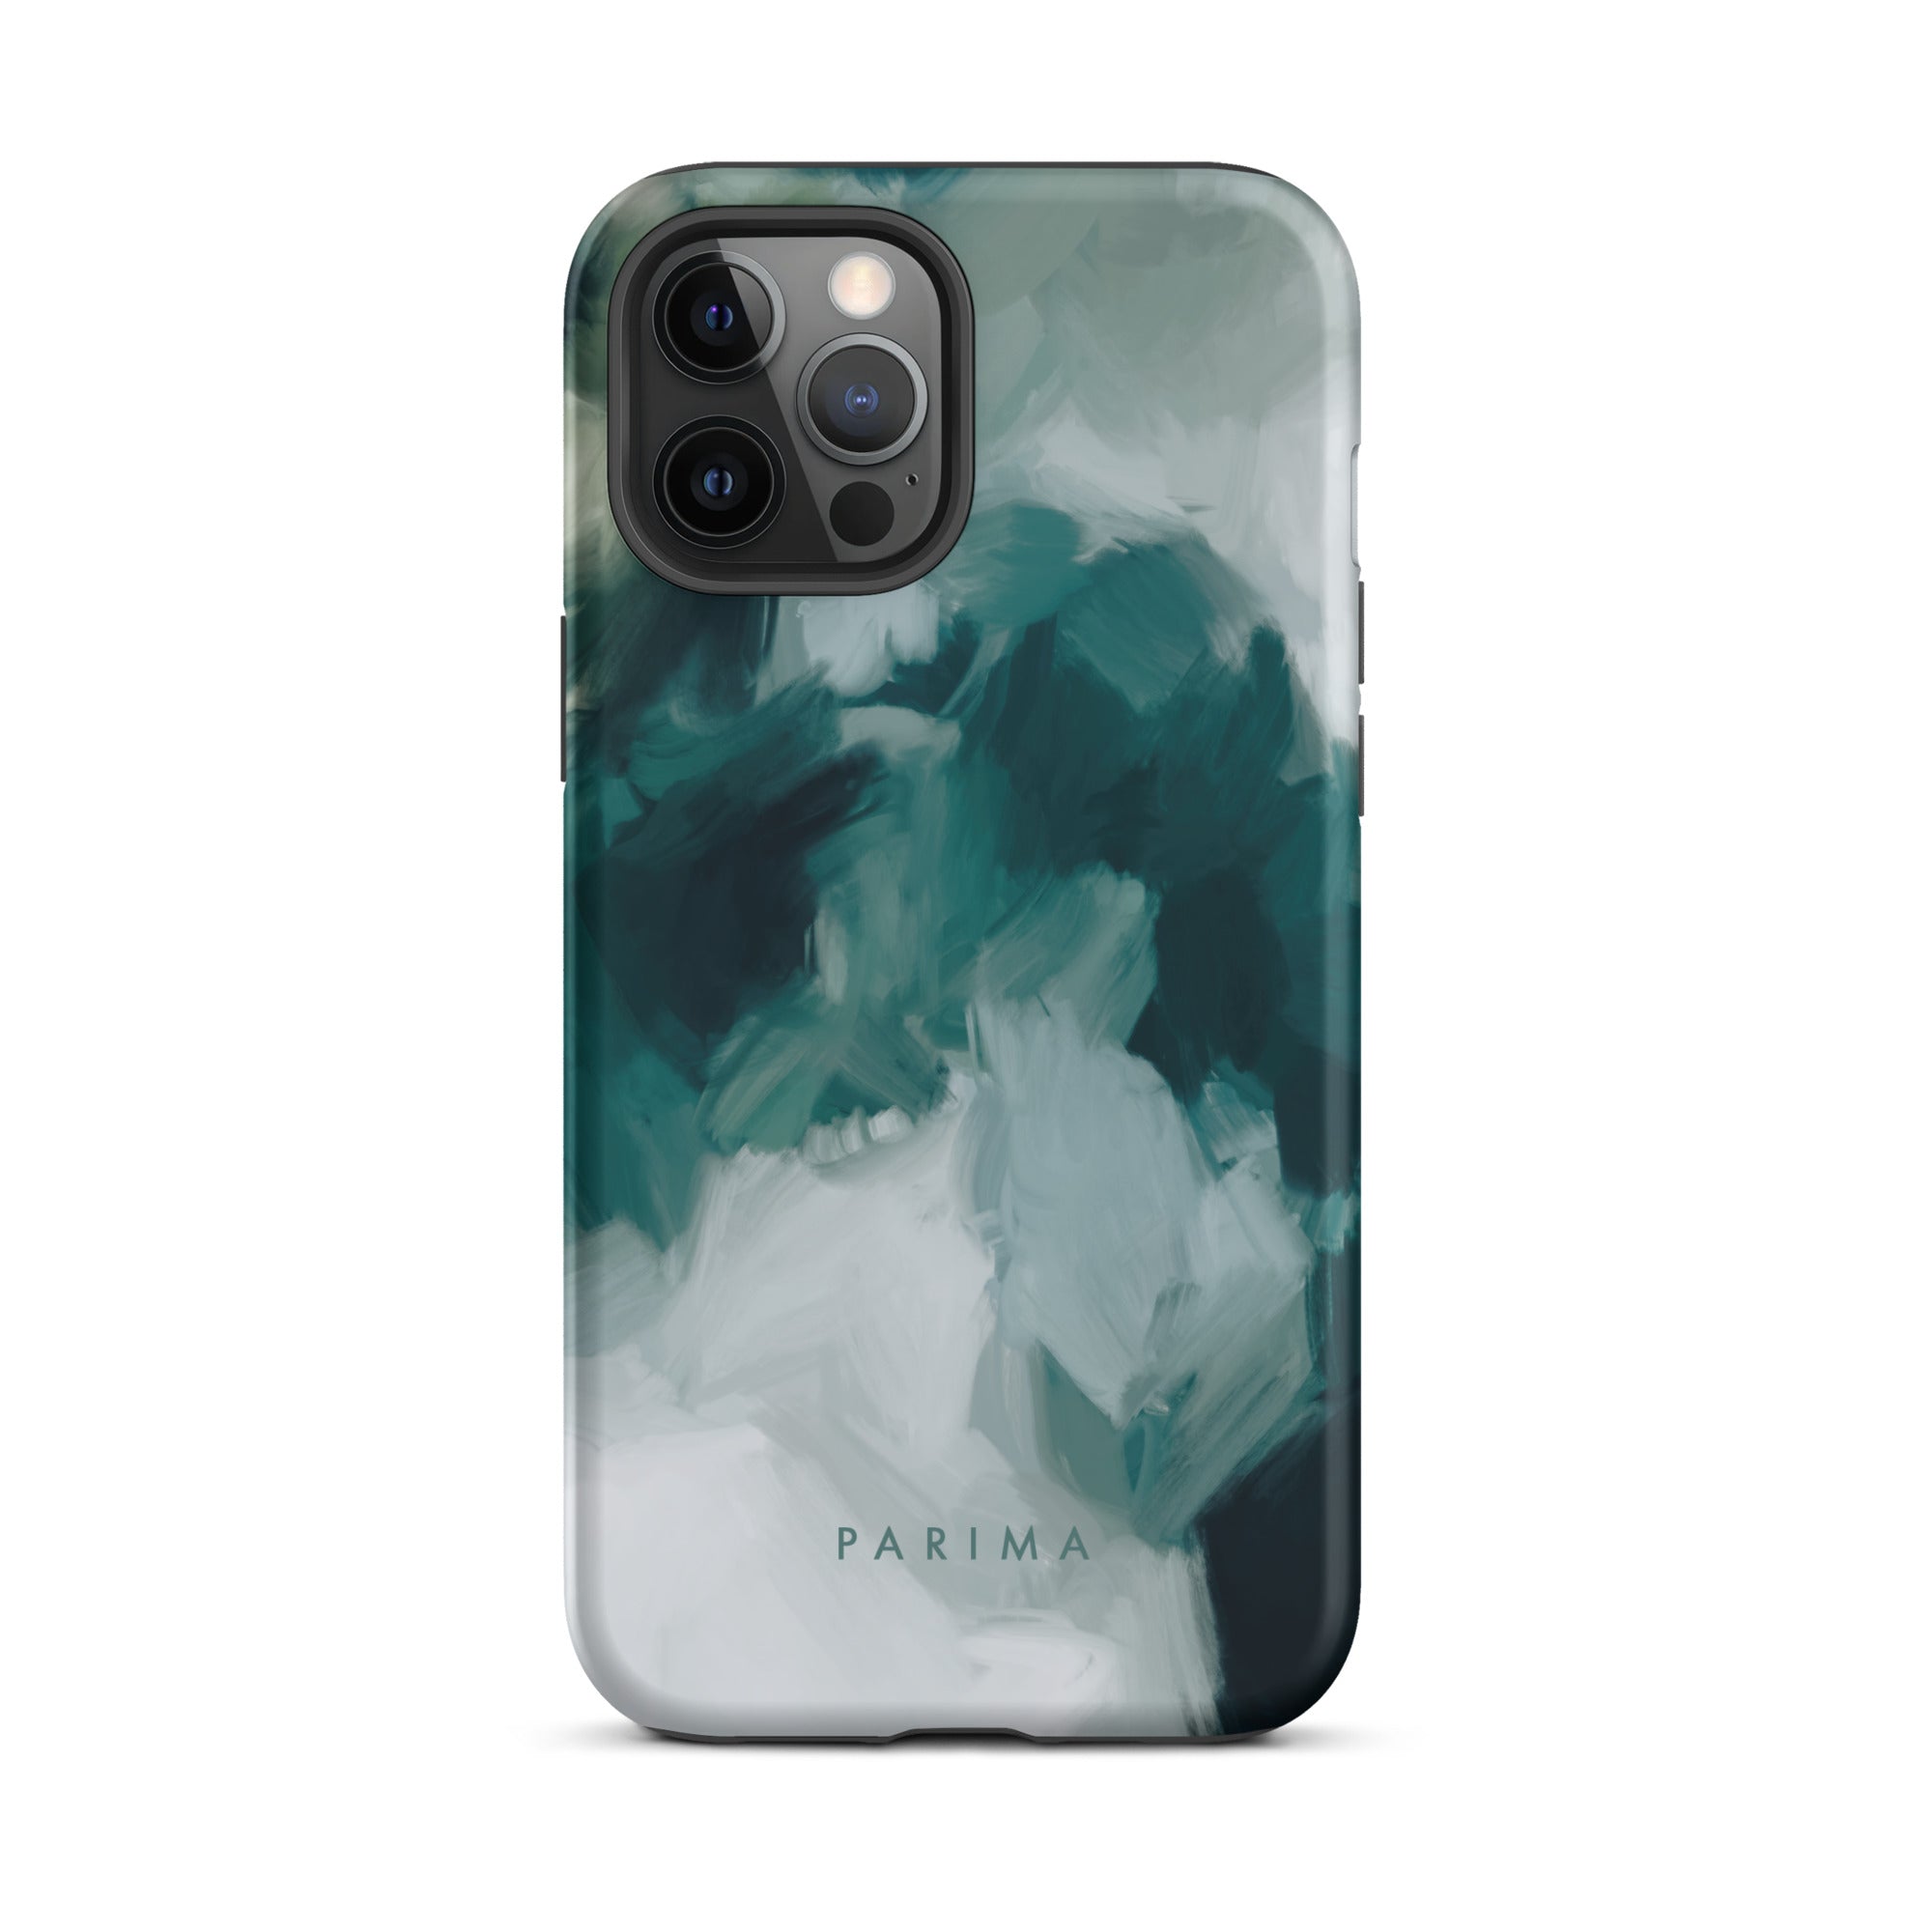 Echo, emerald green abstract art - iPhone 12 Pro Max tough case by Parima Studio